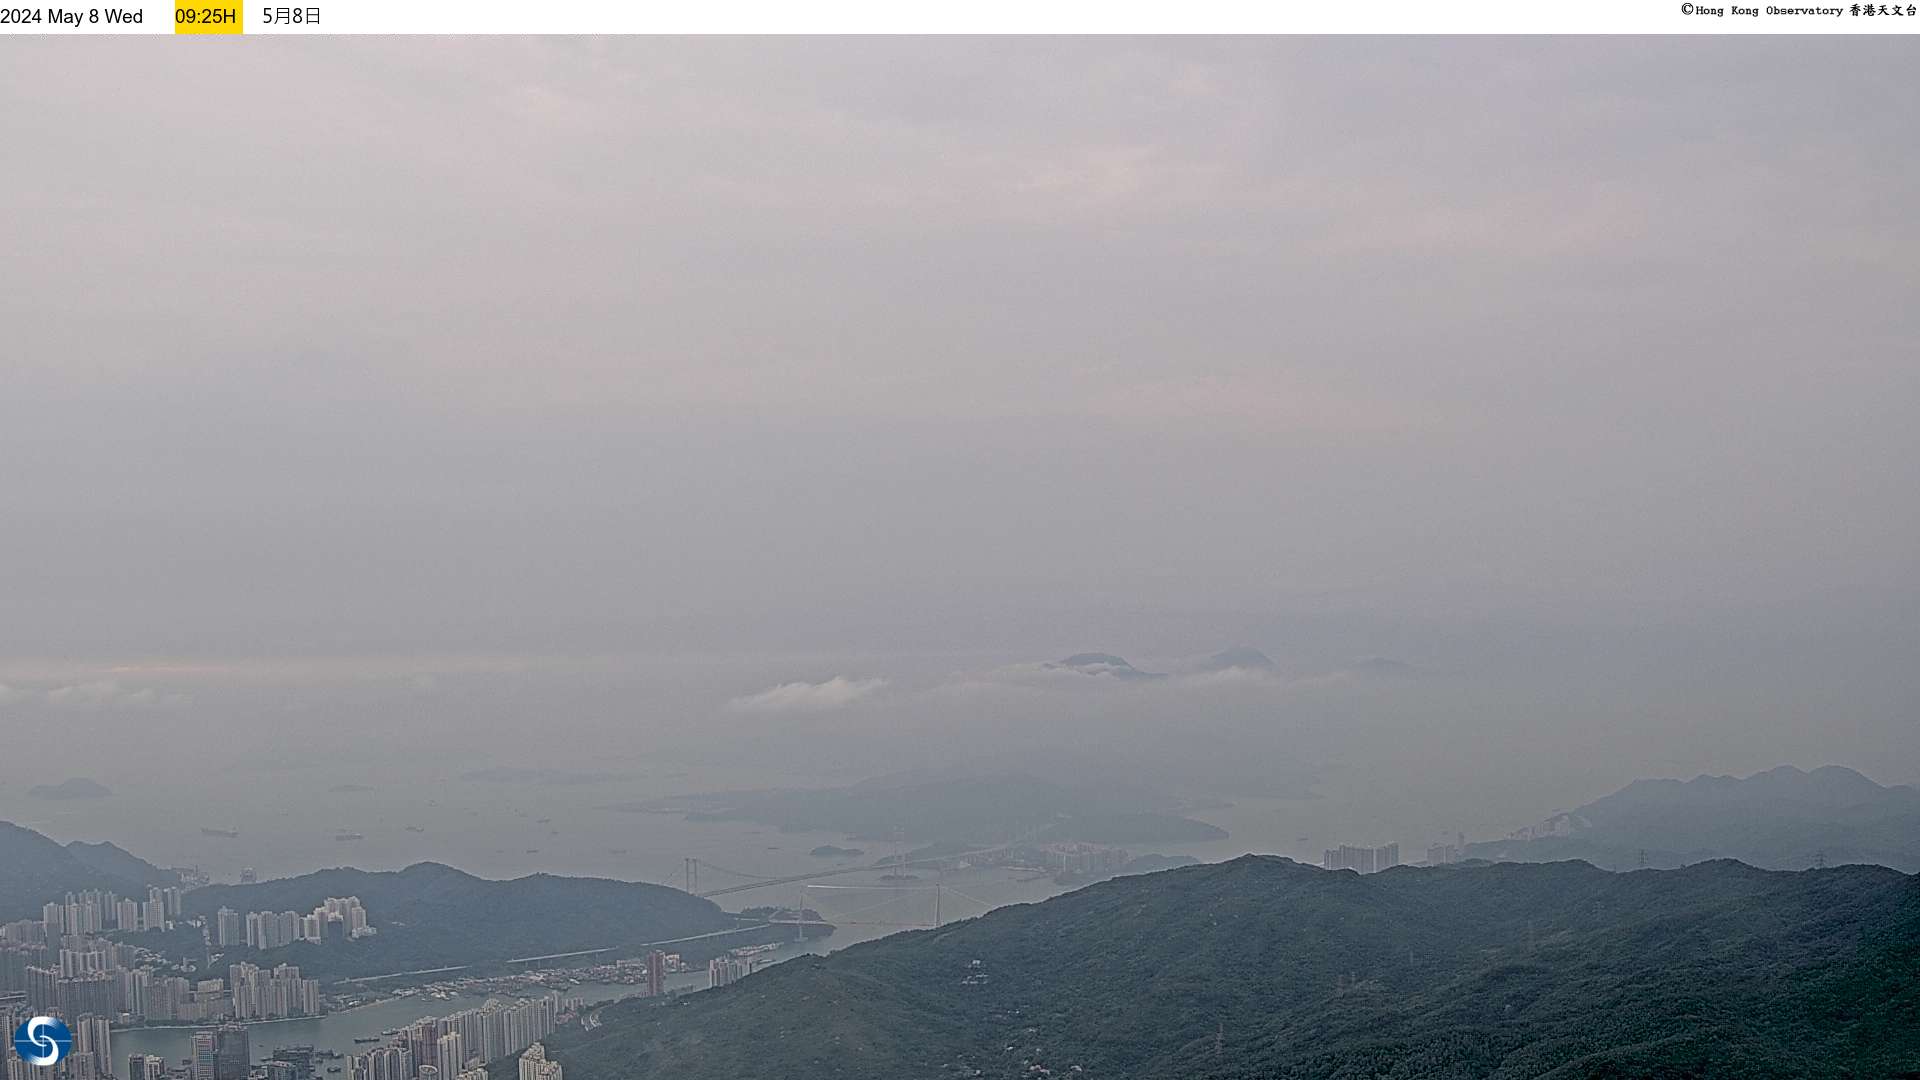 Hong Kong Sat. 09:35